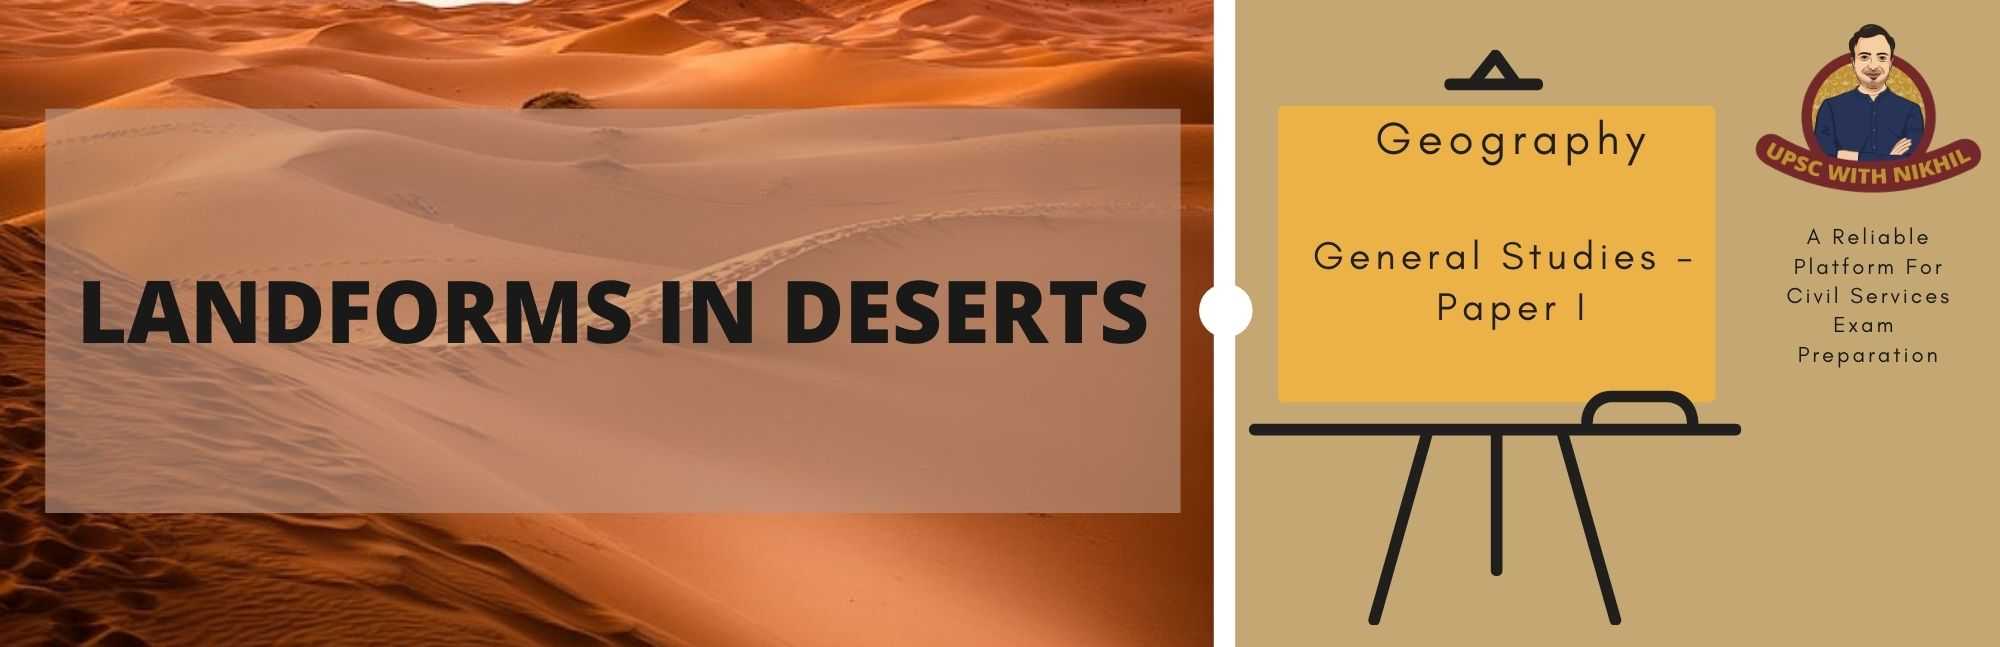 Landforms in Deserts